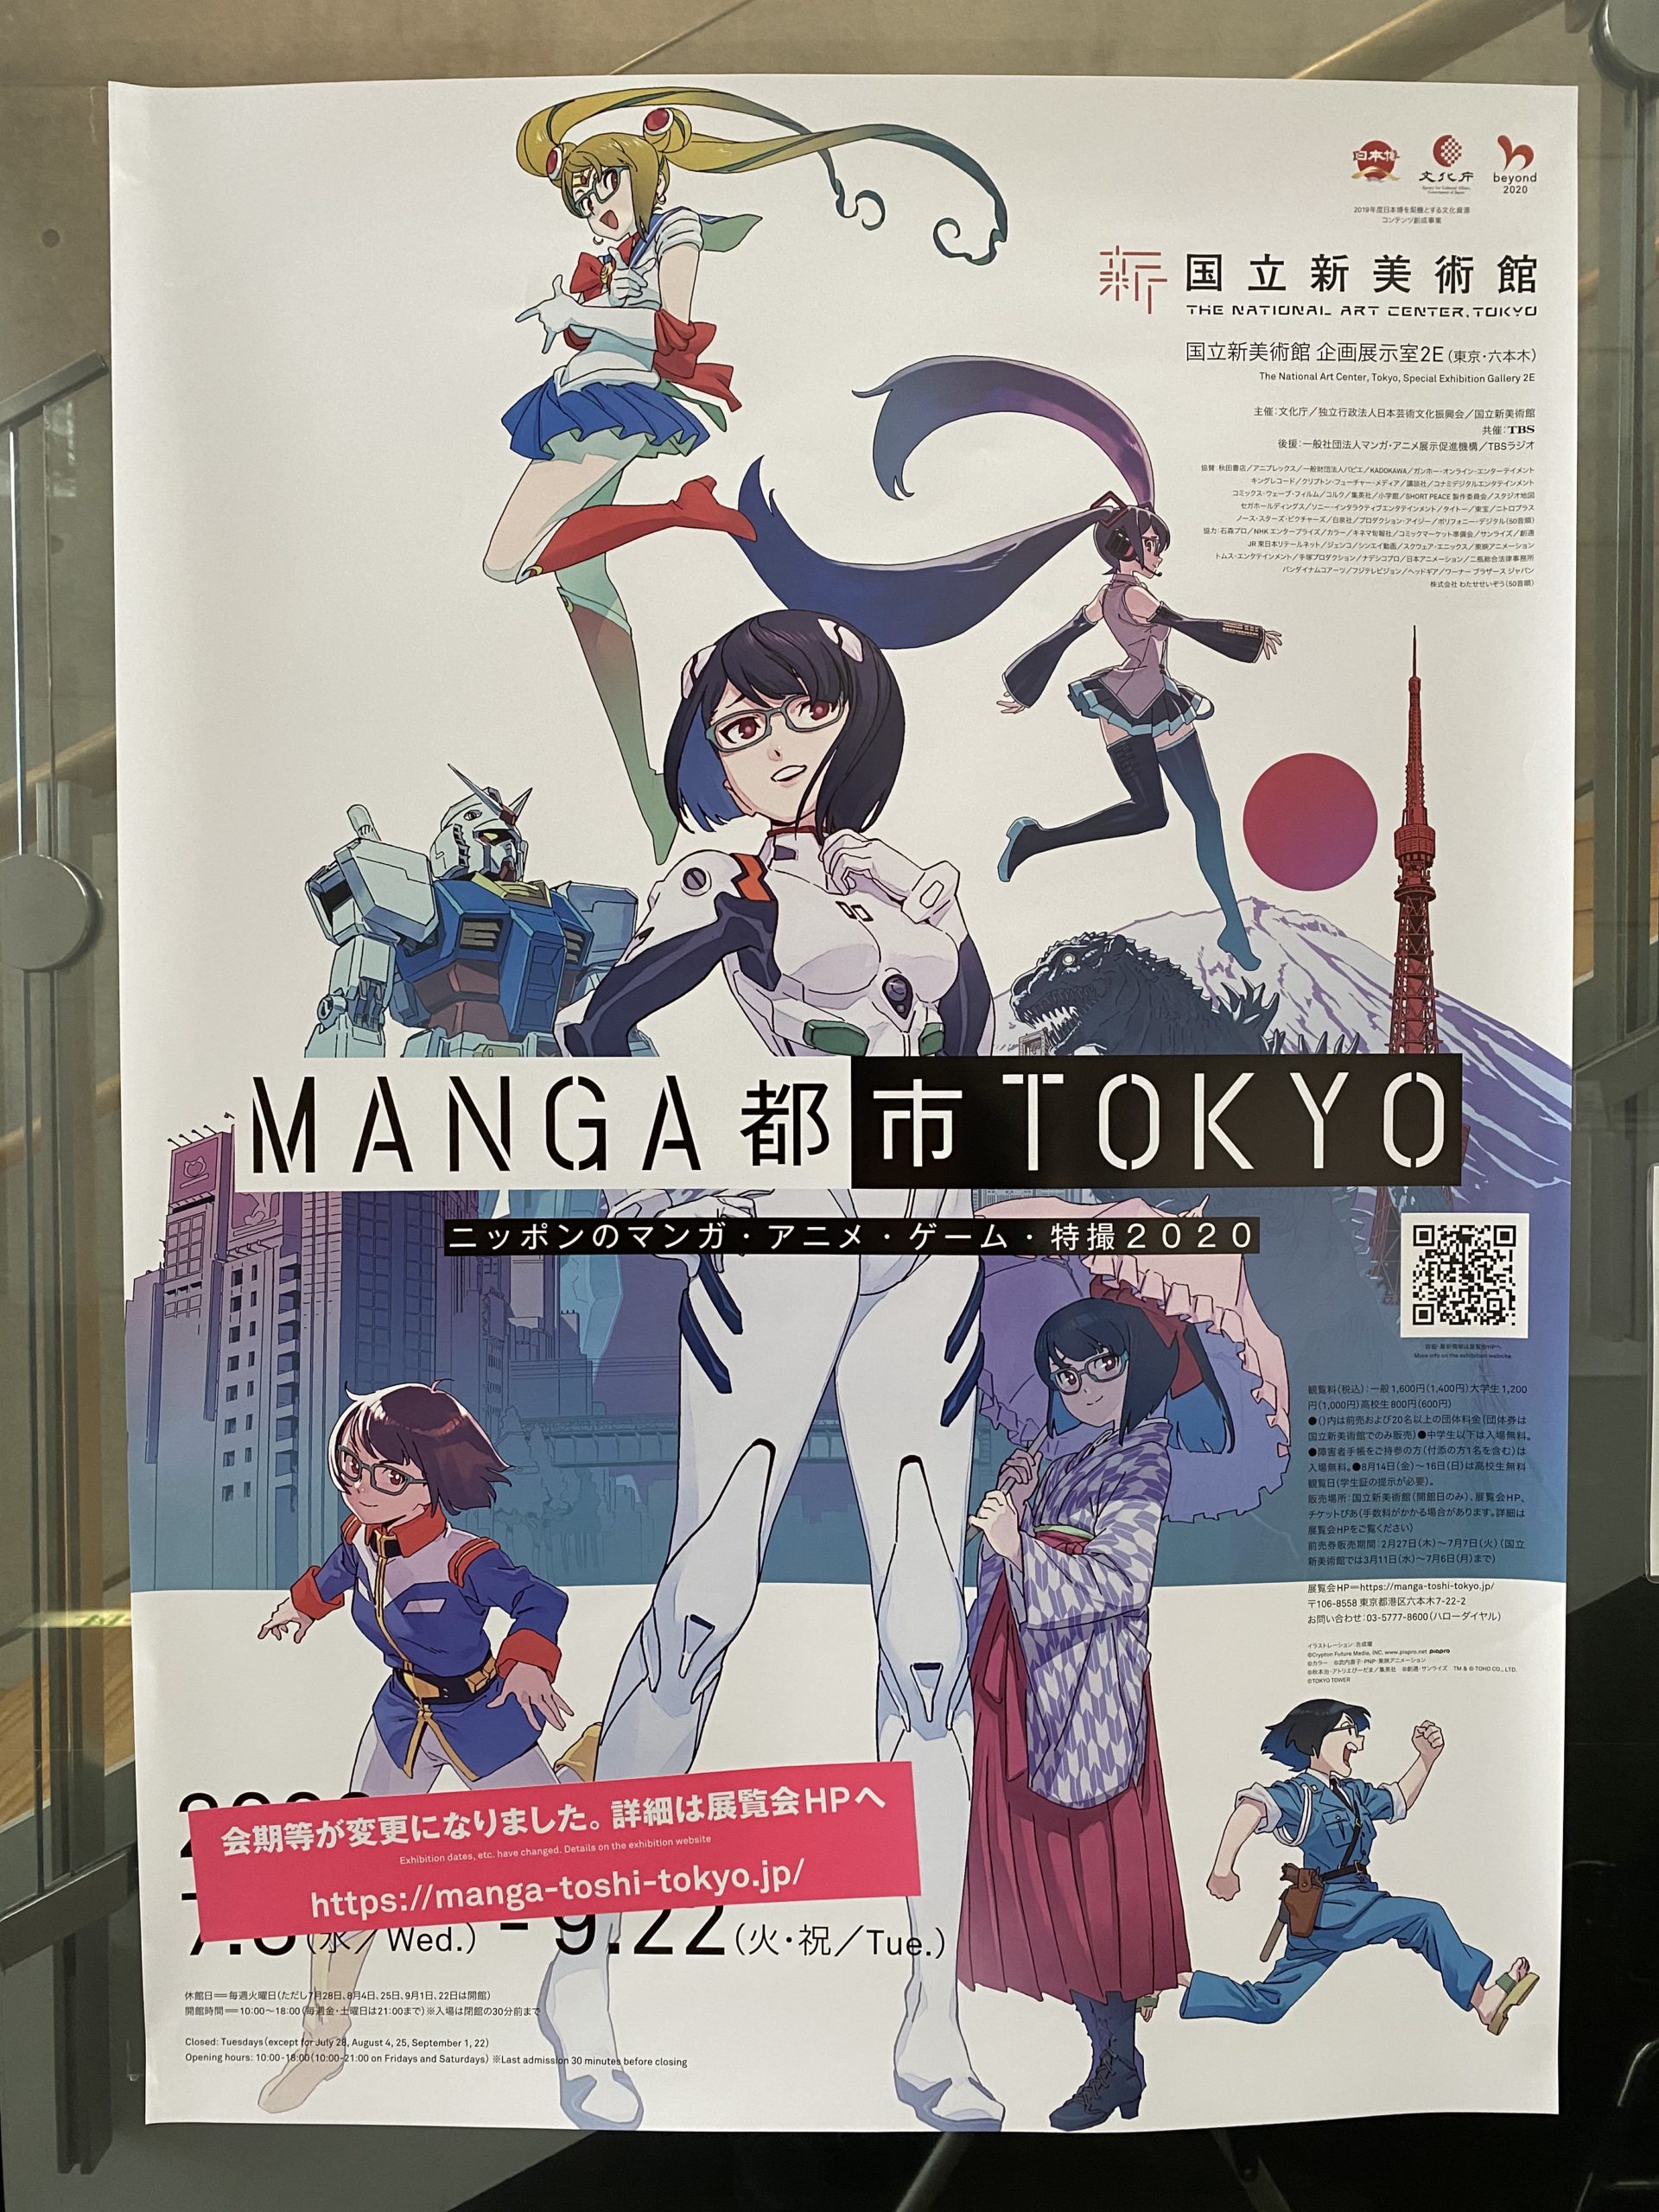 Manga都市tokyo 展 国立新美術館 スピリチャルでアートな日々 時々読書